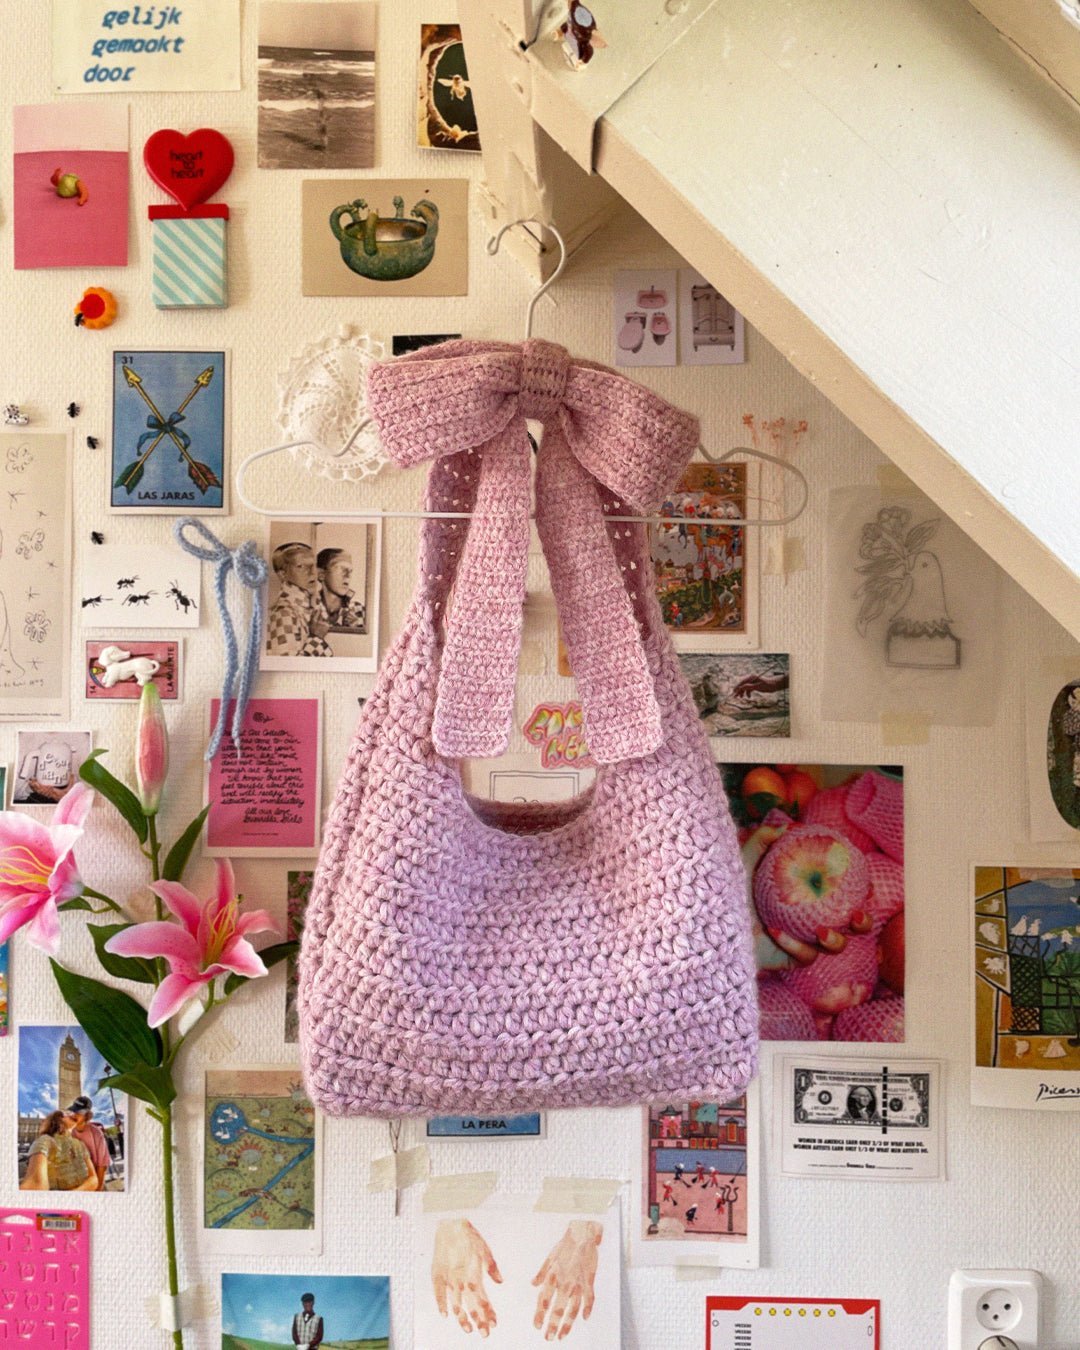 Crochet Bag Pattern ✧ Big Bow bag ✧ by devout hand